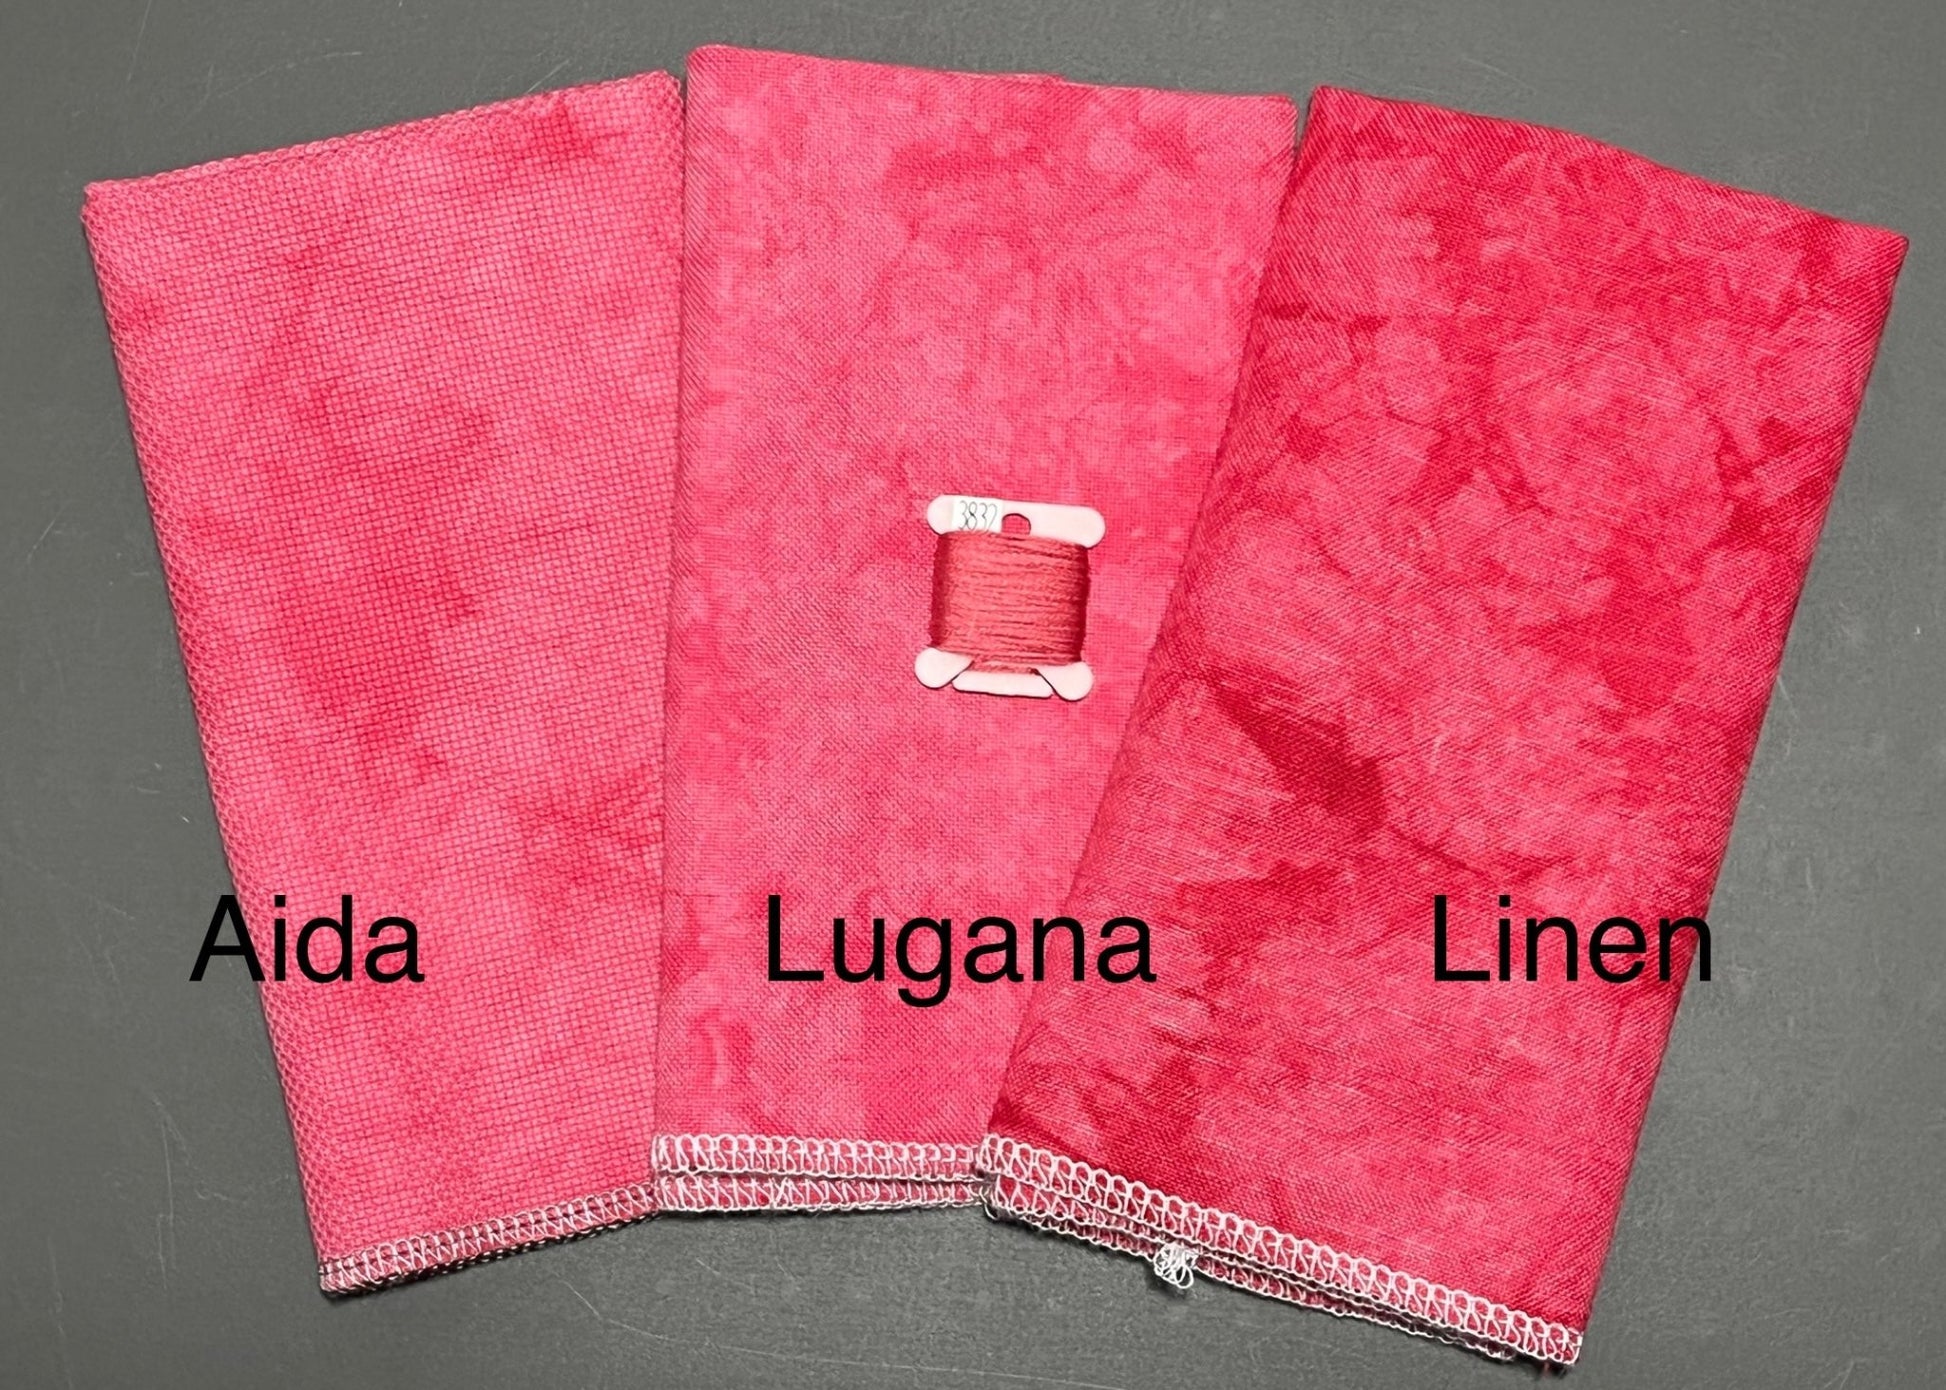 28ct lugana - 18x27 - November FOTM - Dyeing for Cross Stitch